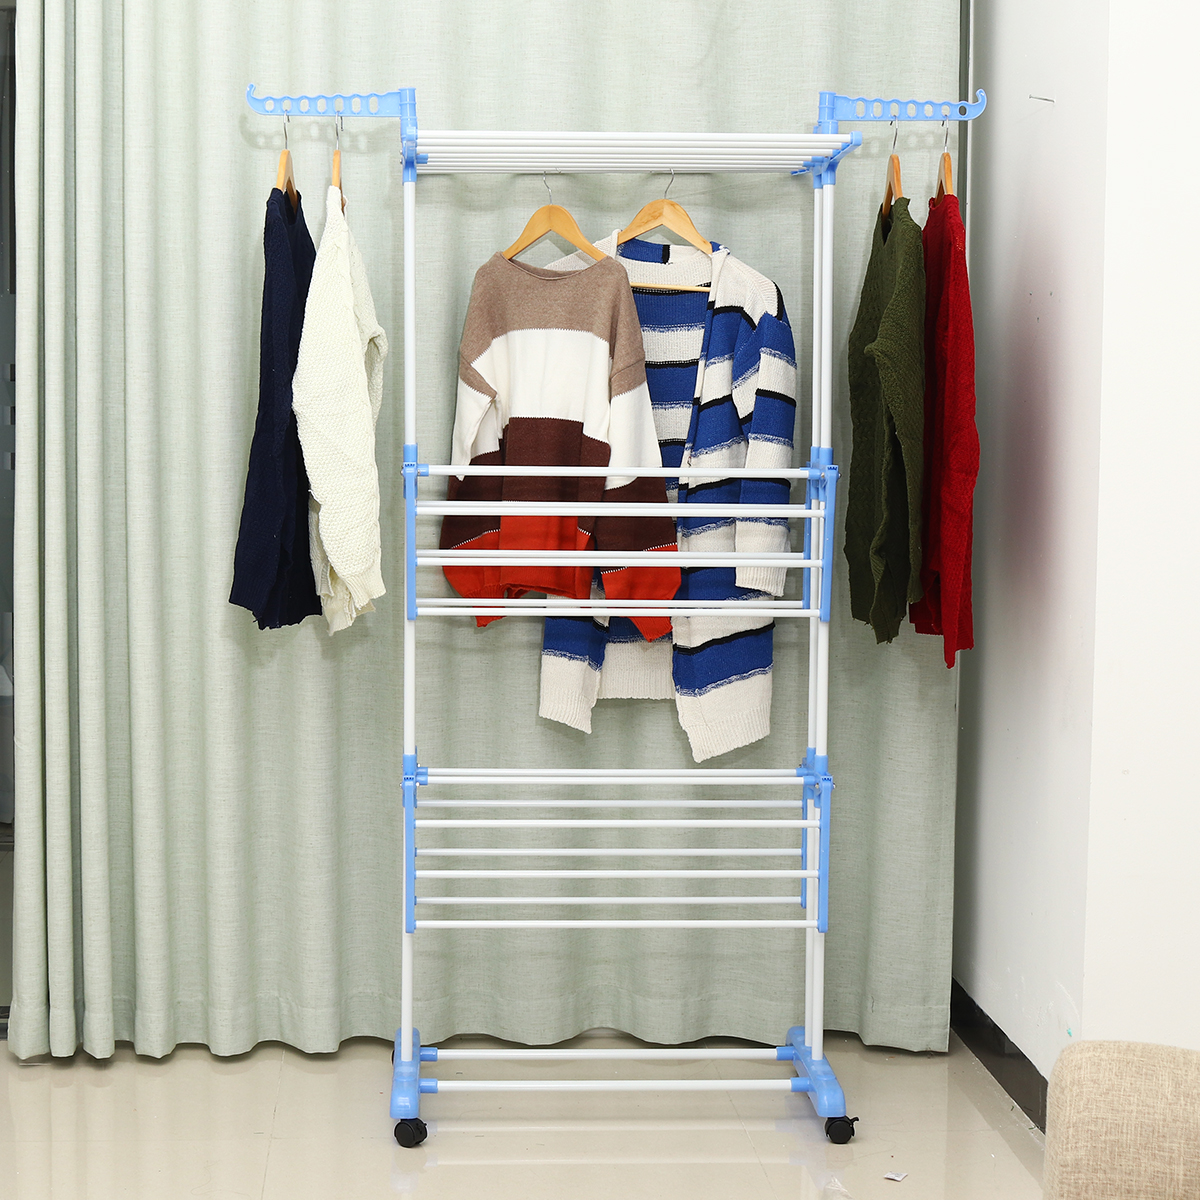 Laundry-Cloth-Storage-Drying-Rack-Portable-Folding-Dryer-Hanger-Heavy-Duty-1588097